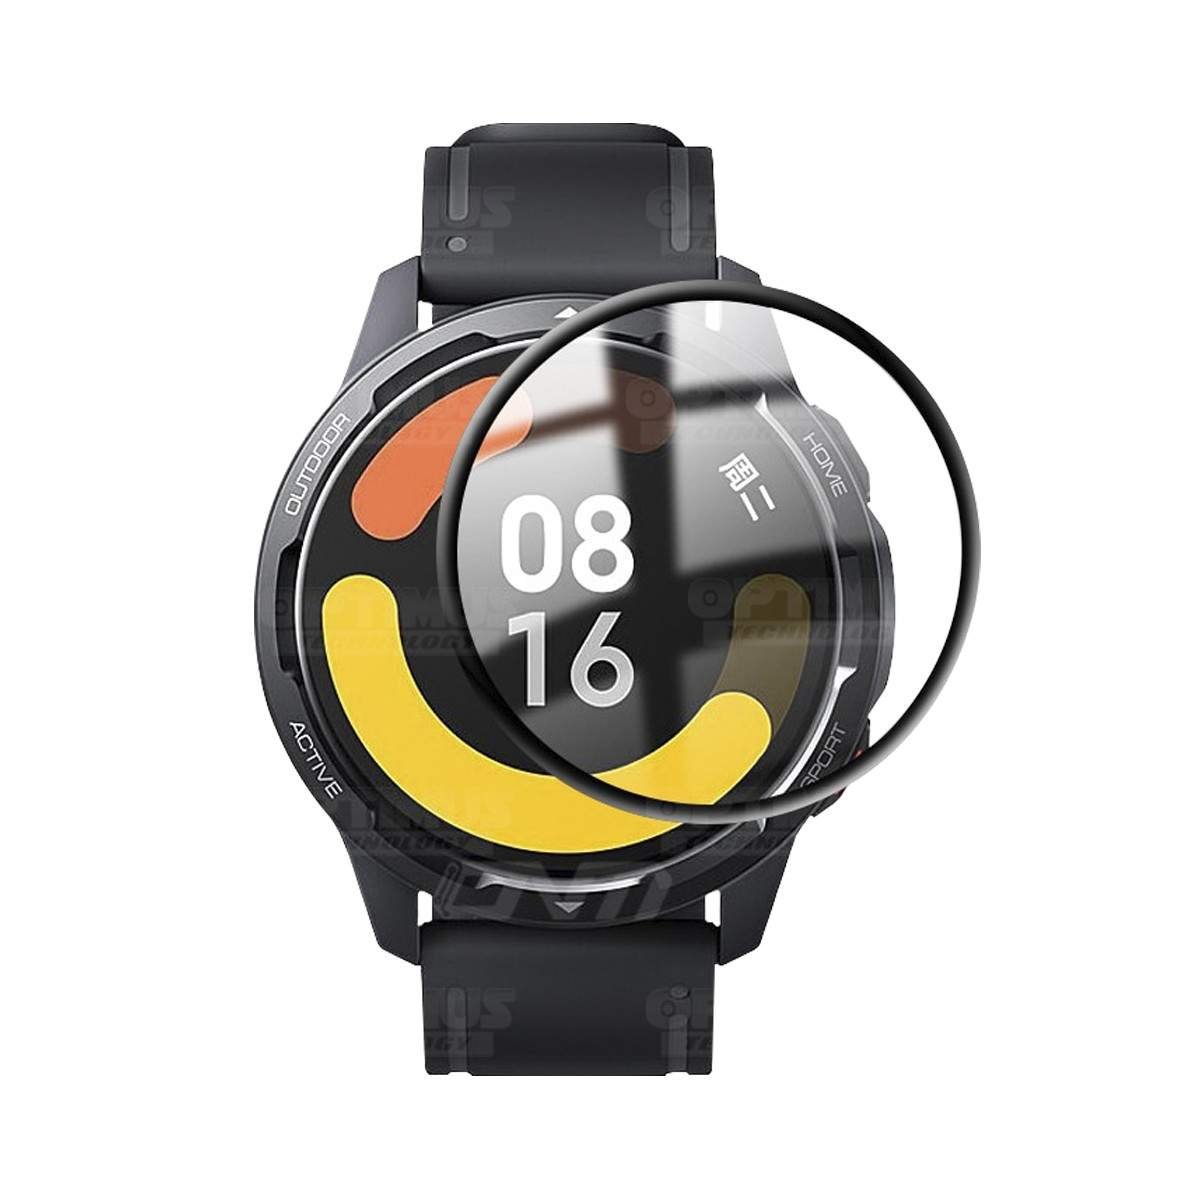 Kit Pulso Correa Y Vidrio Templado Nanoglass Protector Para Reloj Xiaomi Amazfit  GTS 2E Color Azul